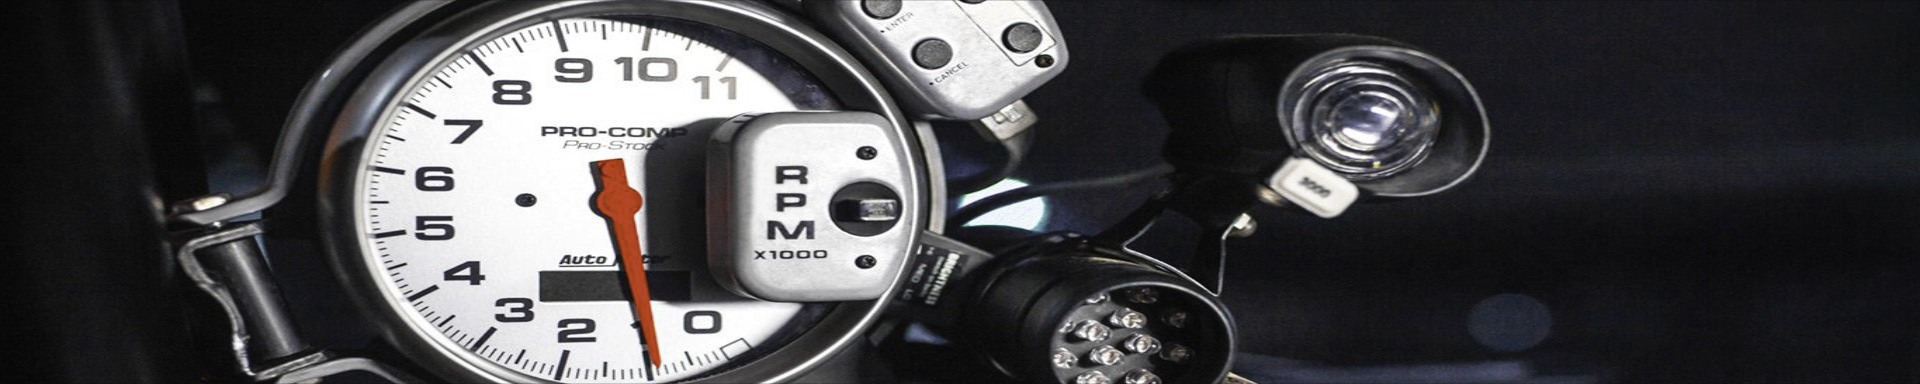 Tachometers & Shift Lights | GarageAndFab.com | Munro Industries gf-100103050516